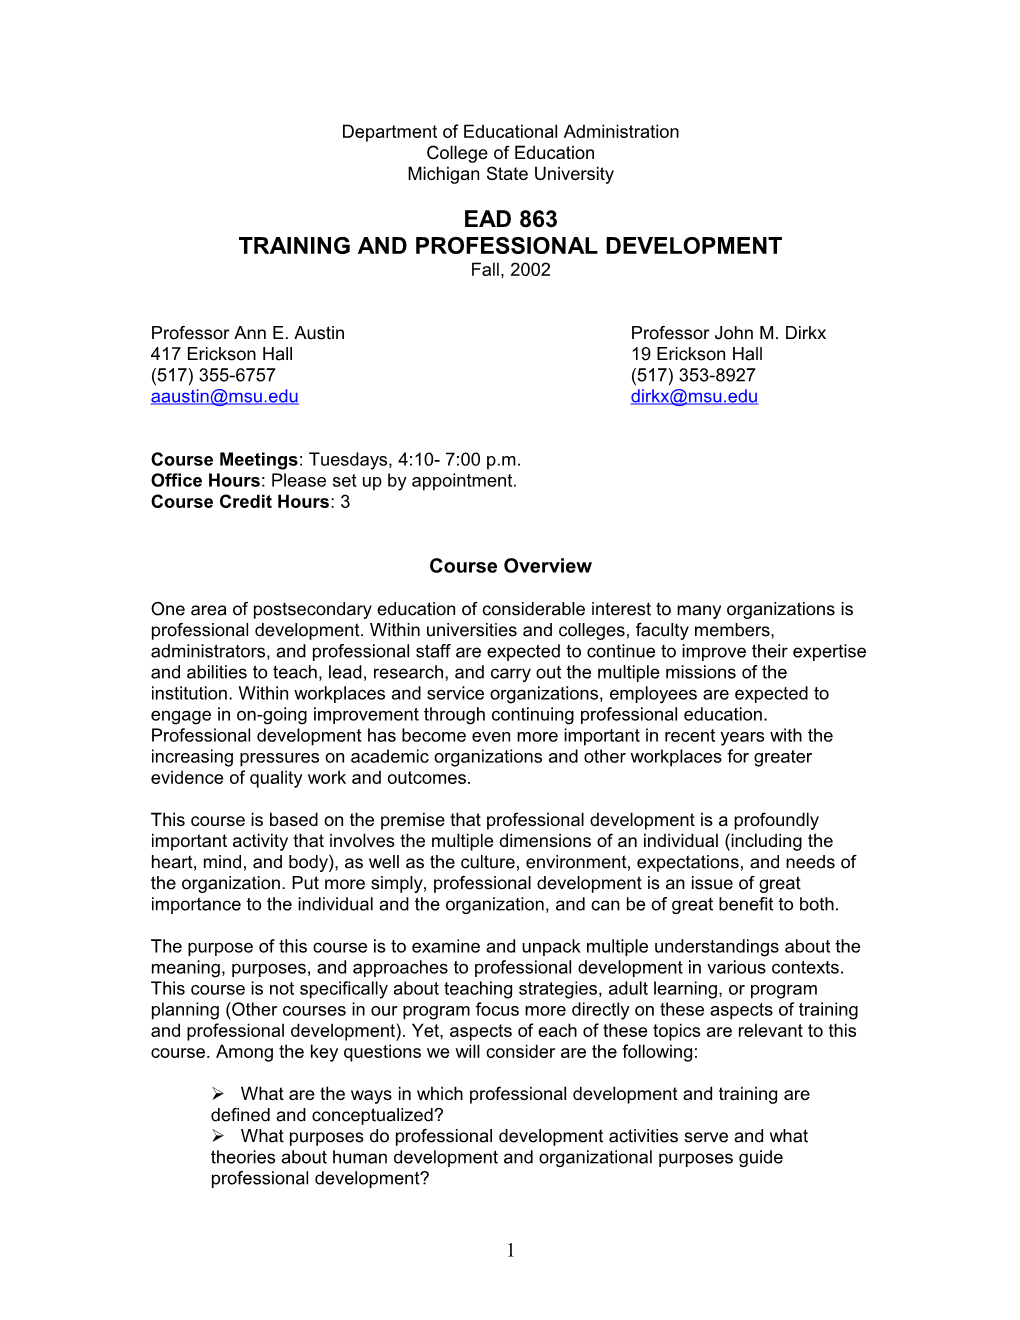 Training and Professional Development